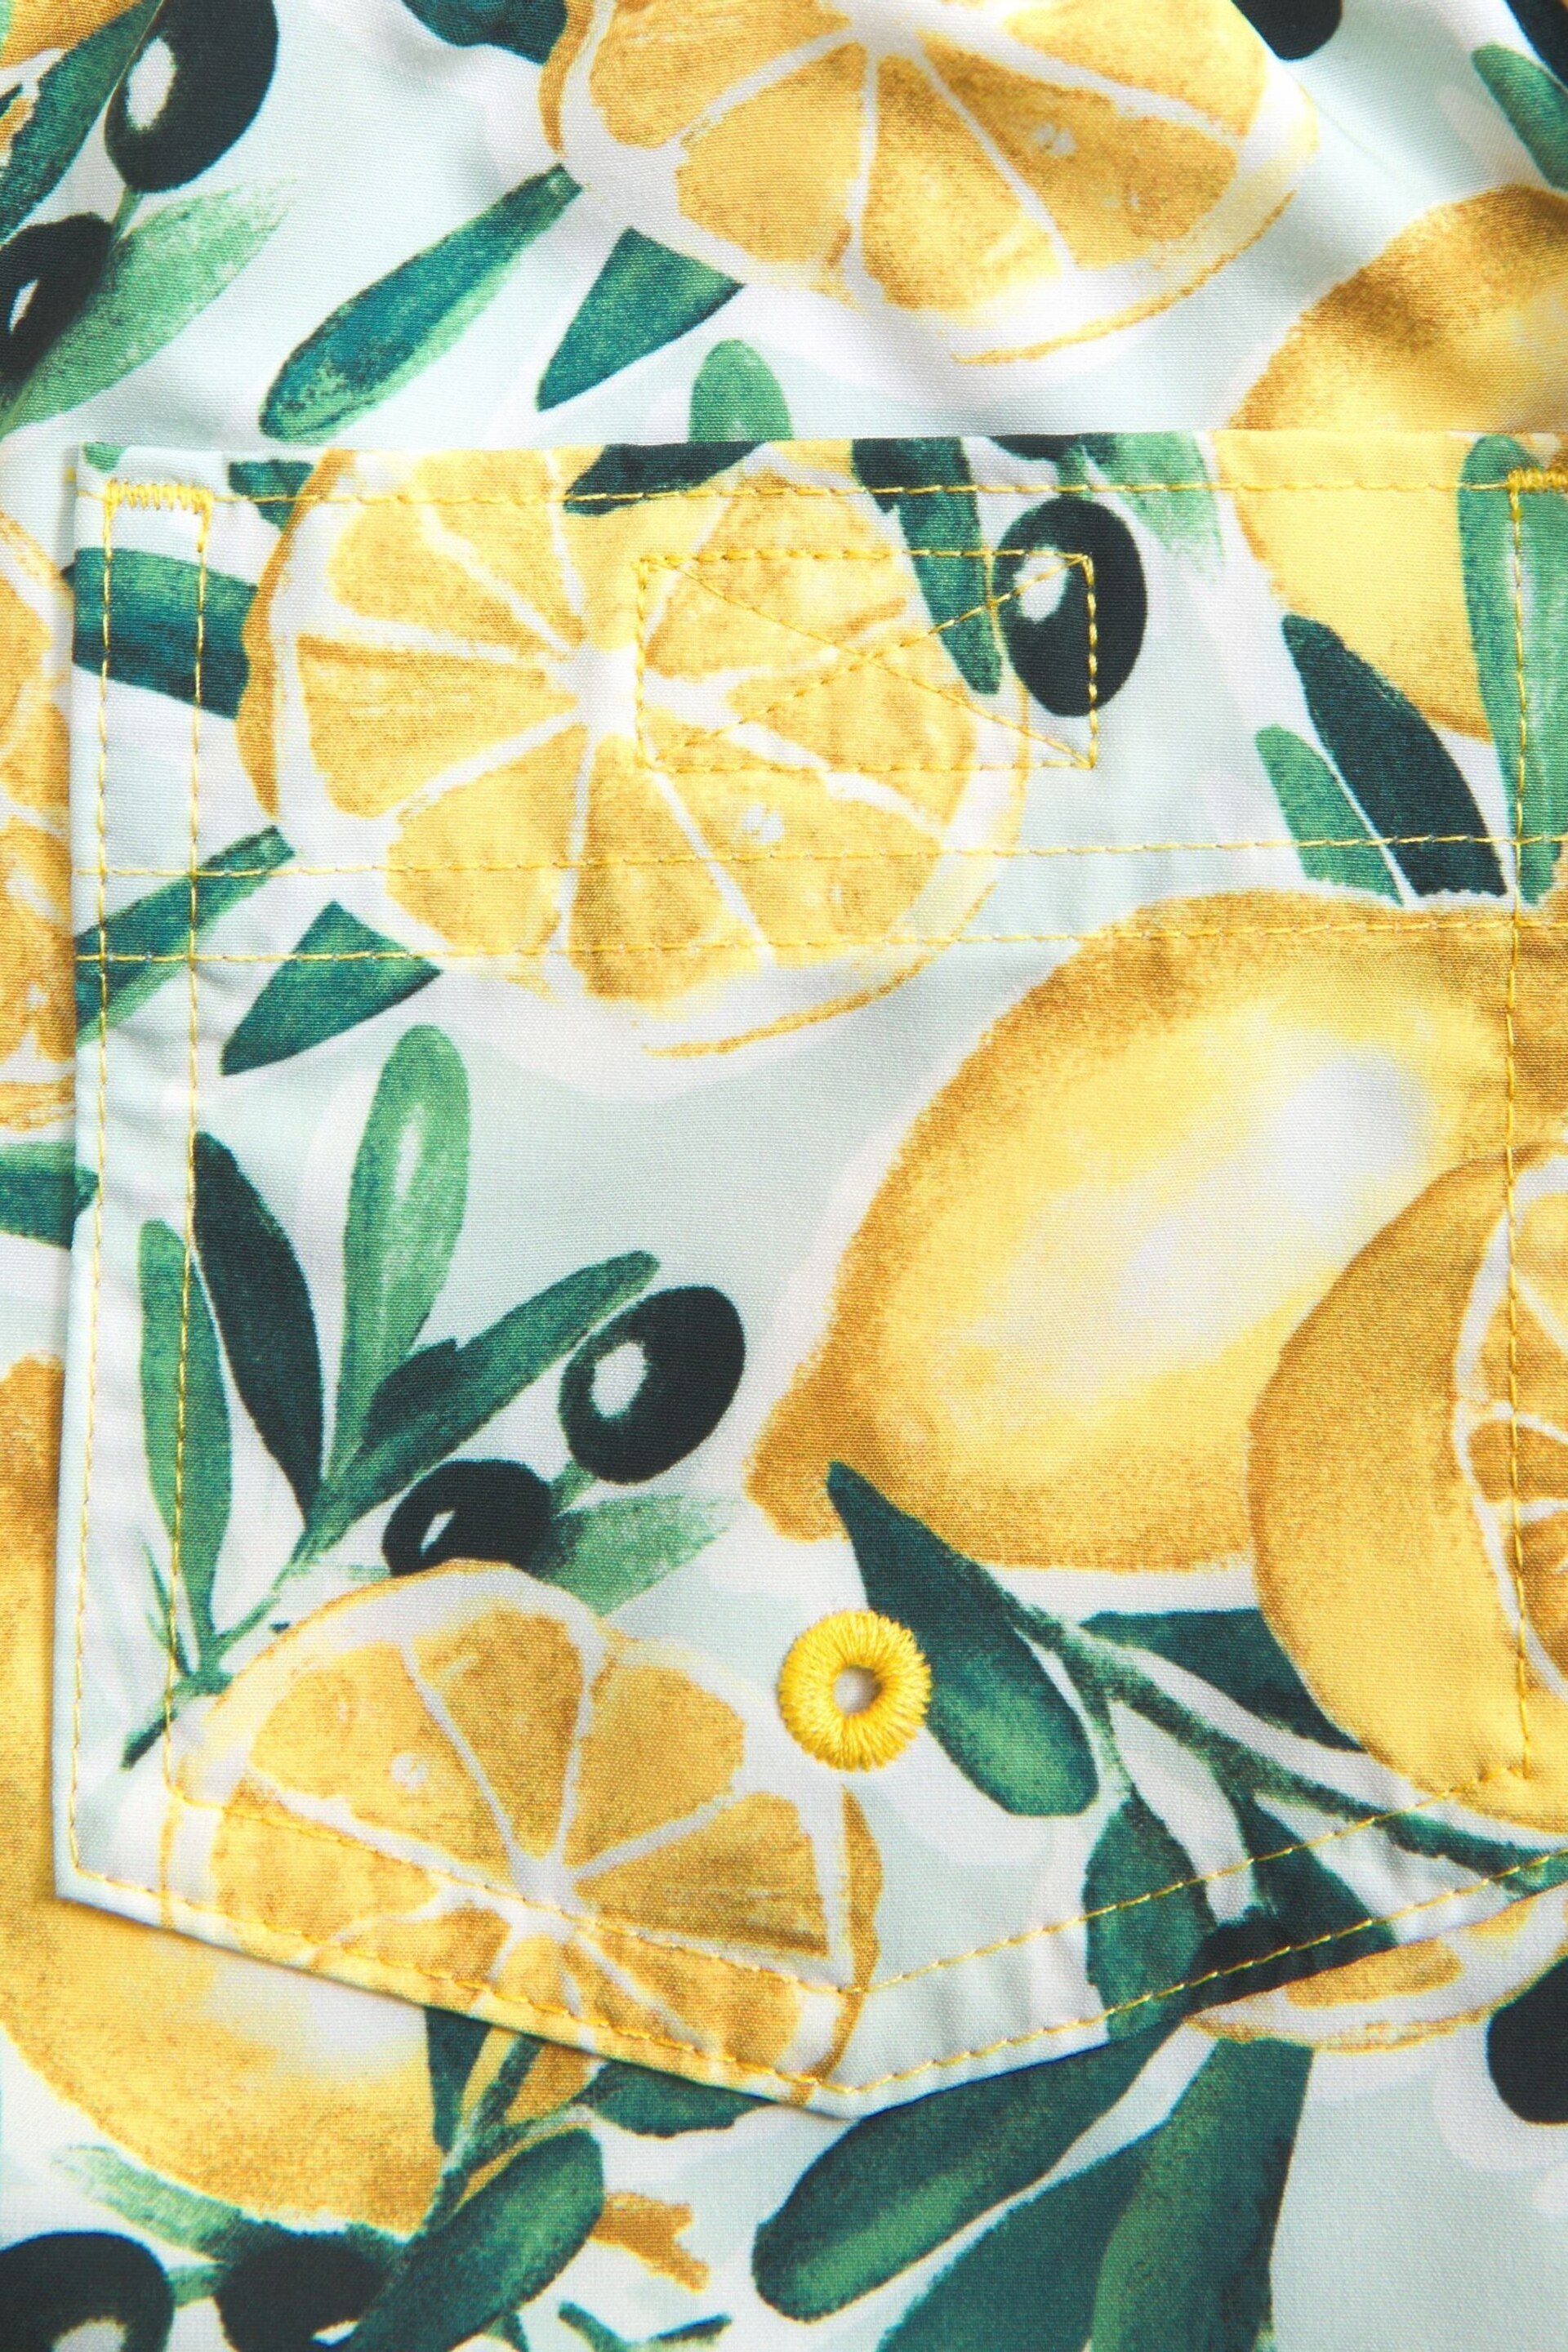 Abercrombie & Fitch Blue Lemon Fruit Print Swim Shorts - Image 3 of 3